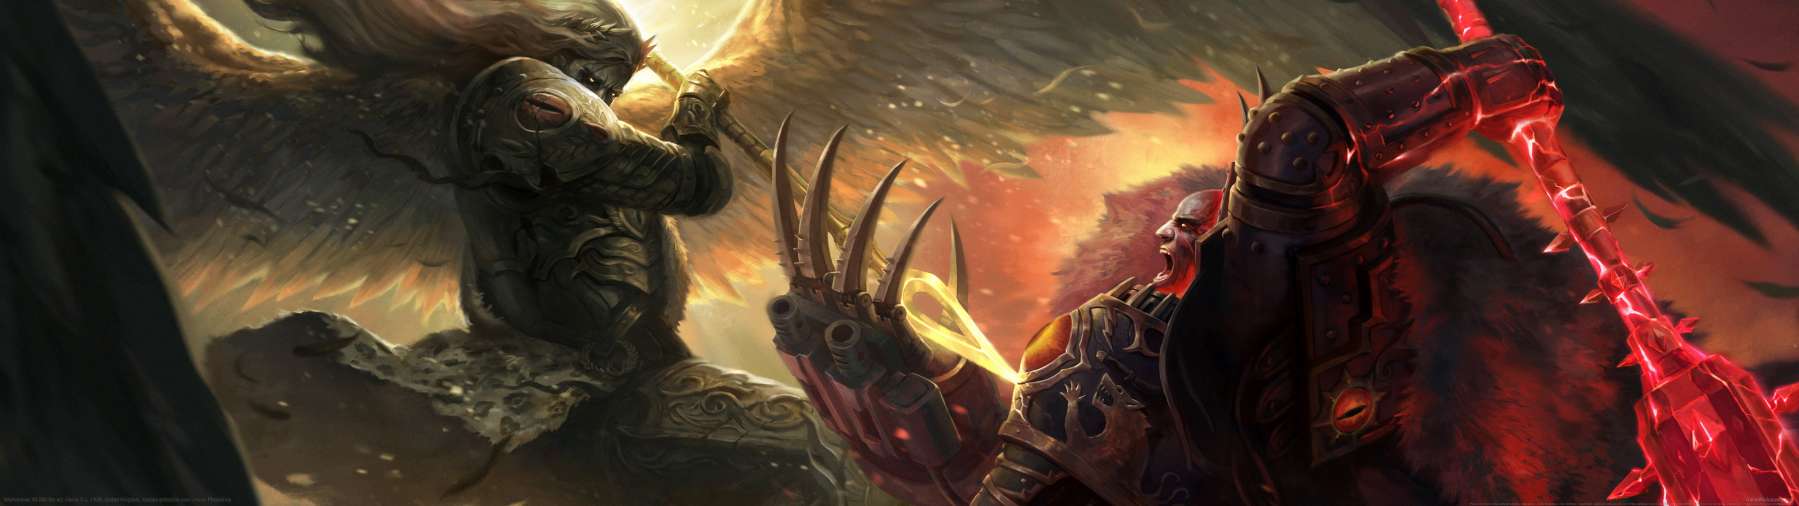 Warhammer 40,000 fan art superwide wallpaper or background 03